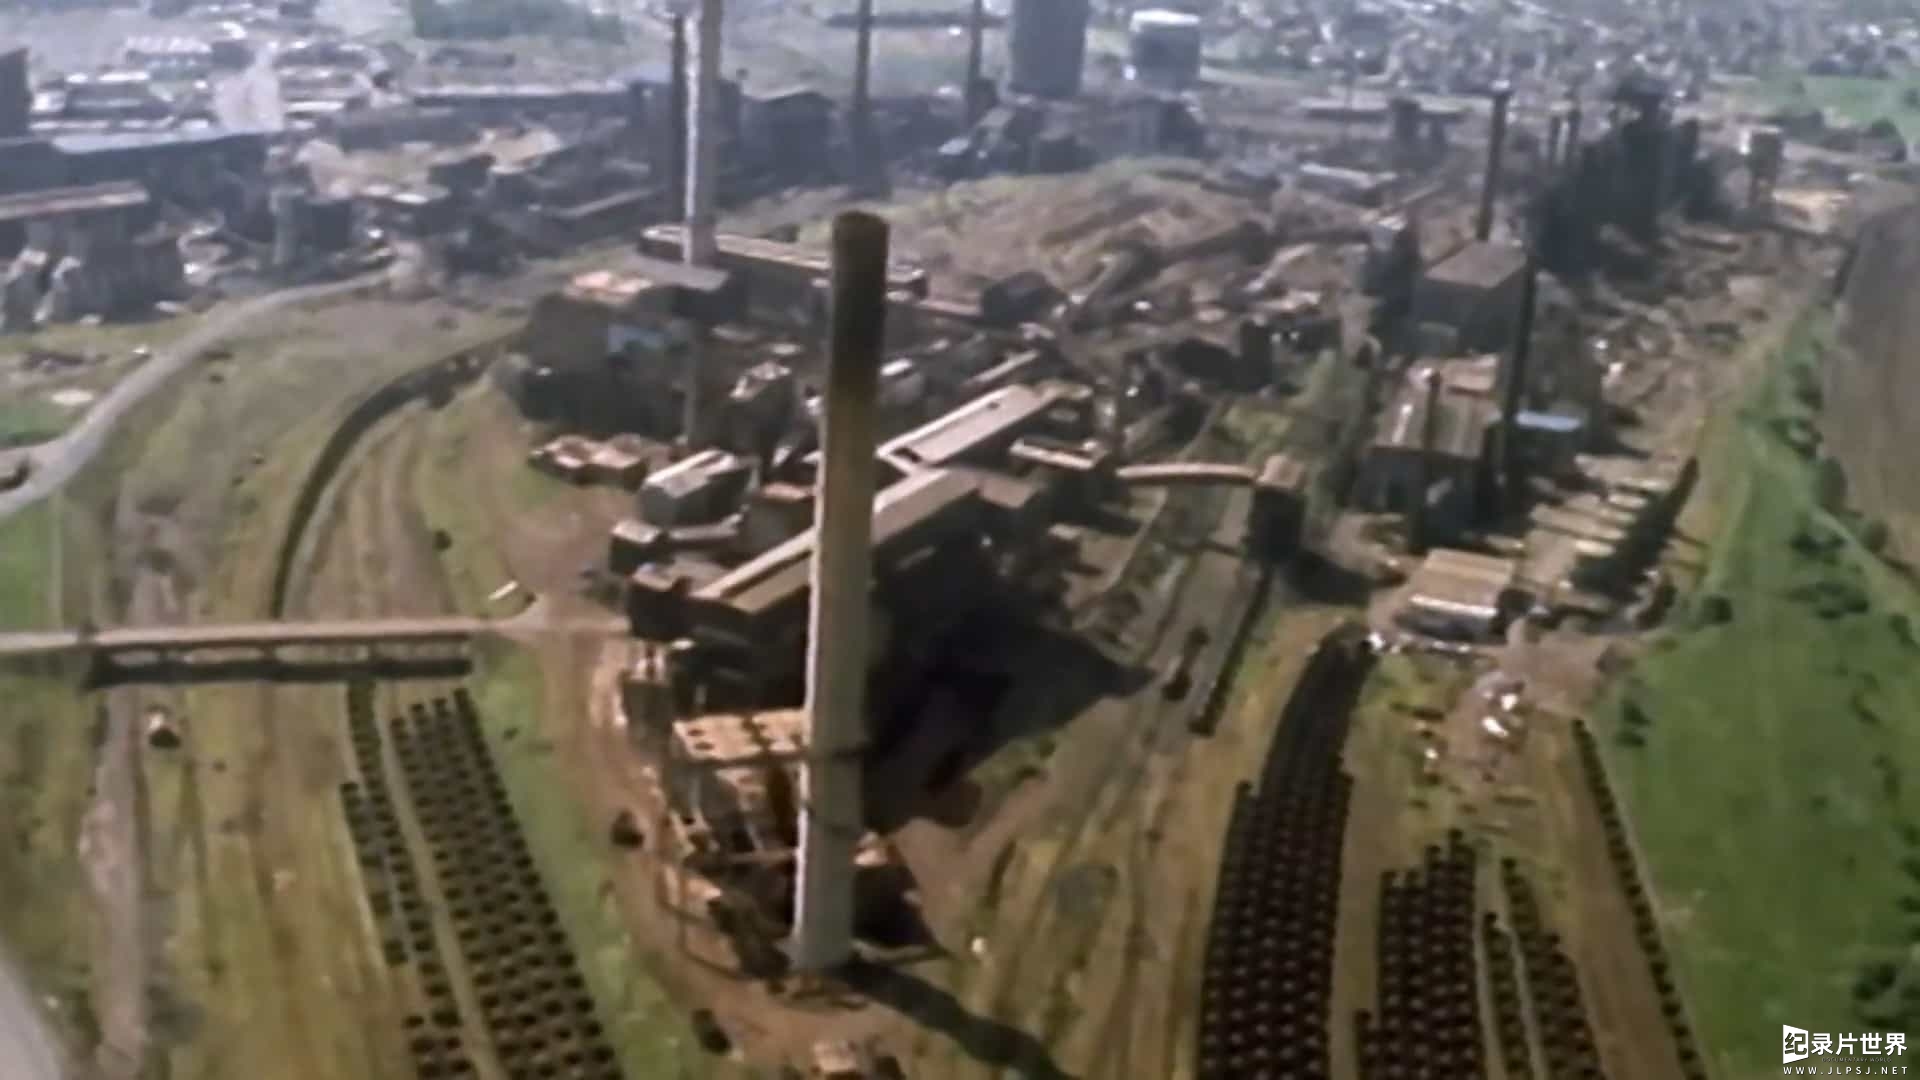 BBC纪录片/地平线系列《毒城 Toxic Town The Corby Poisonings 2020》全1集 